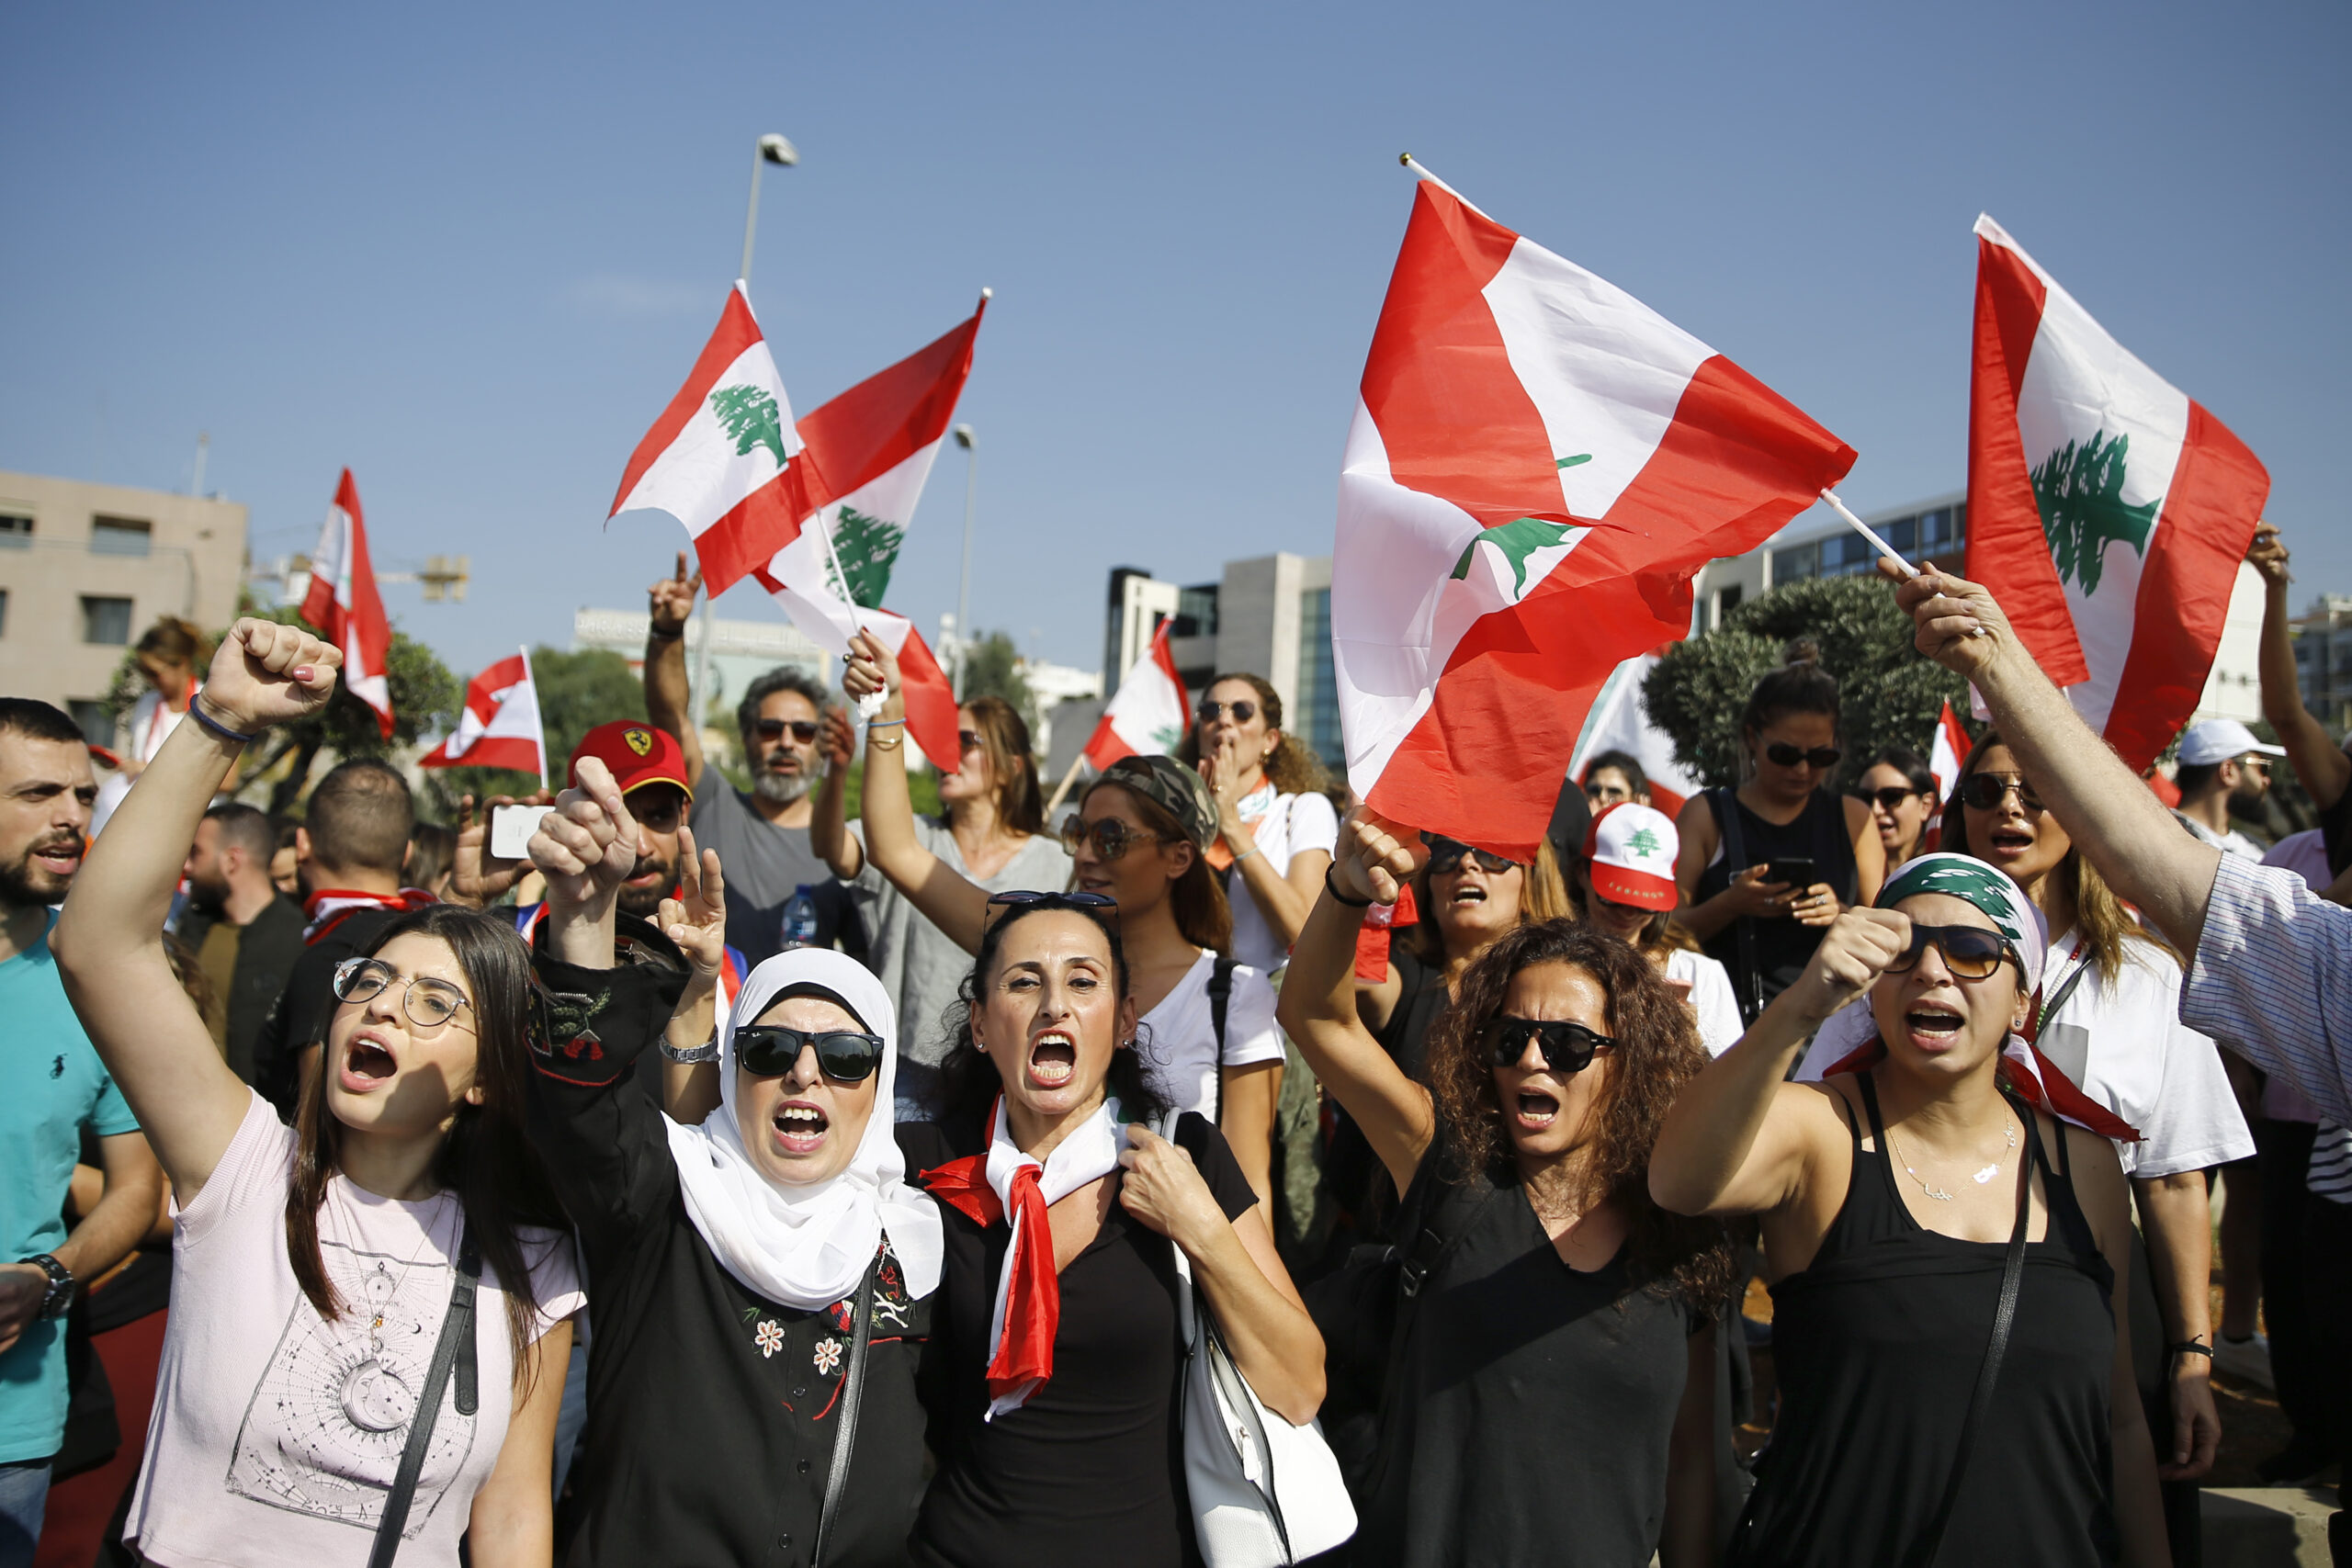 Hayat Mirshad on fighting gender inequality in Lebanon